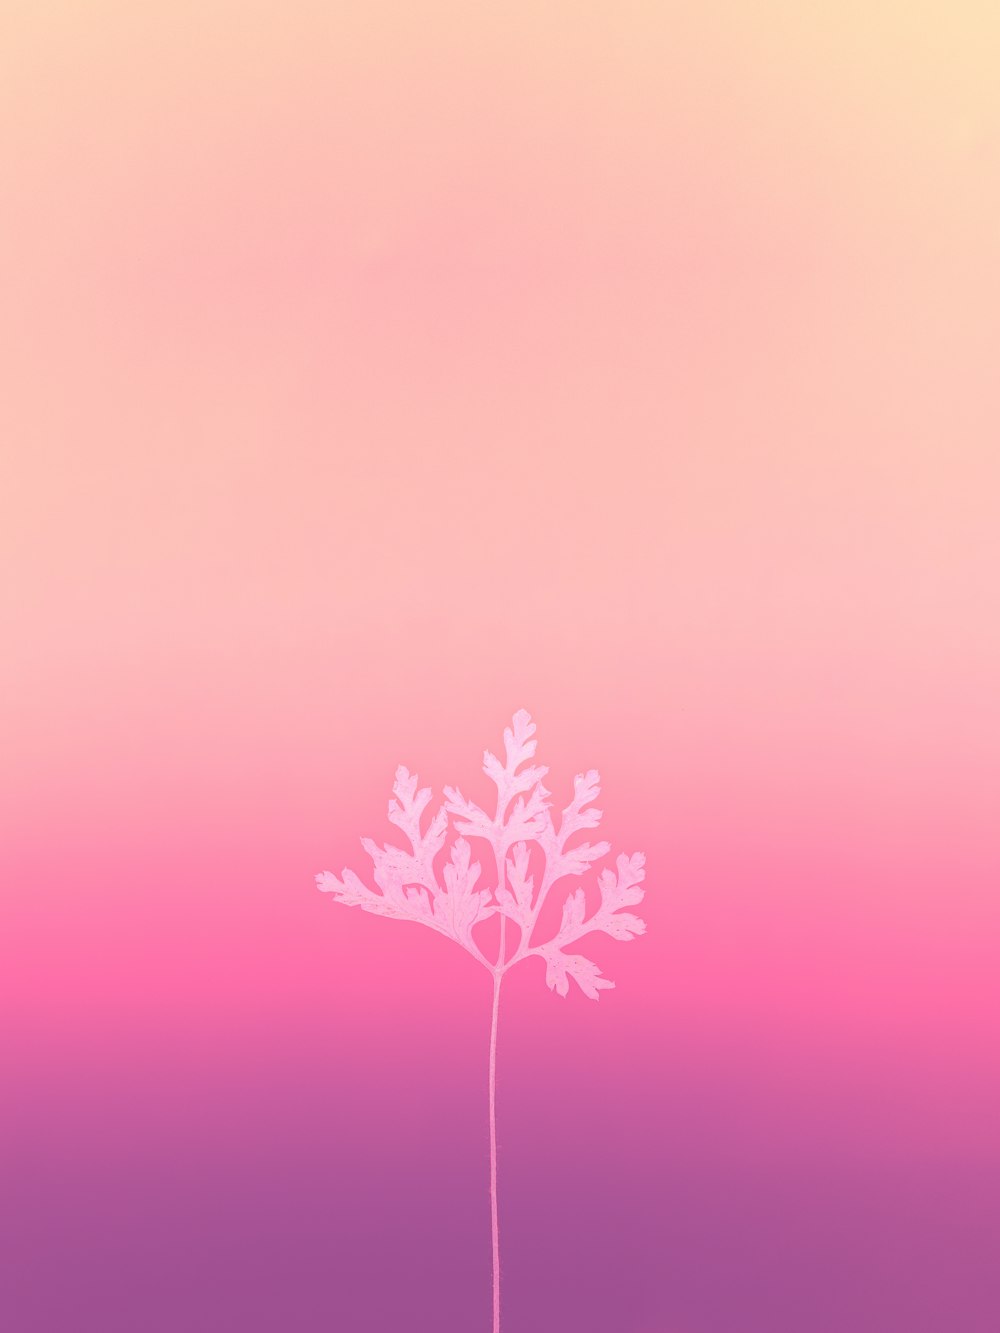 Fondos De Color Rosa Descargar gratis Light Pink Background Pictures [HD] | Unsplash